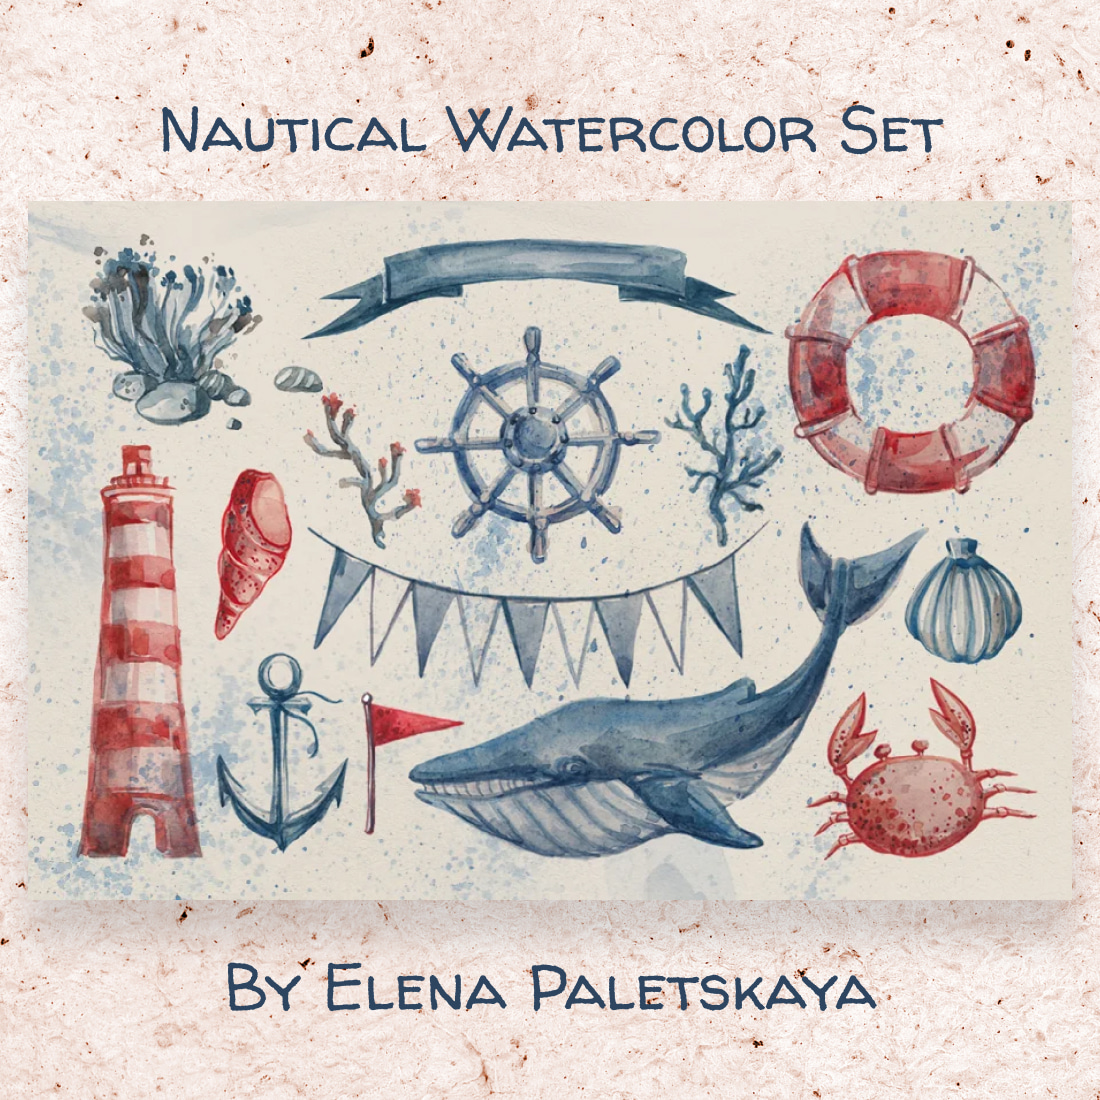 Prints of nautical watercolor set.